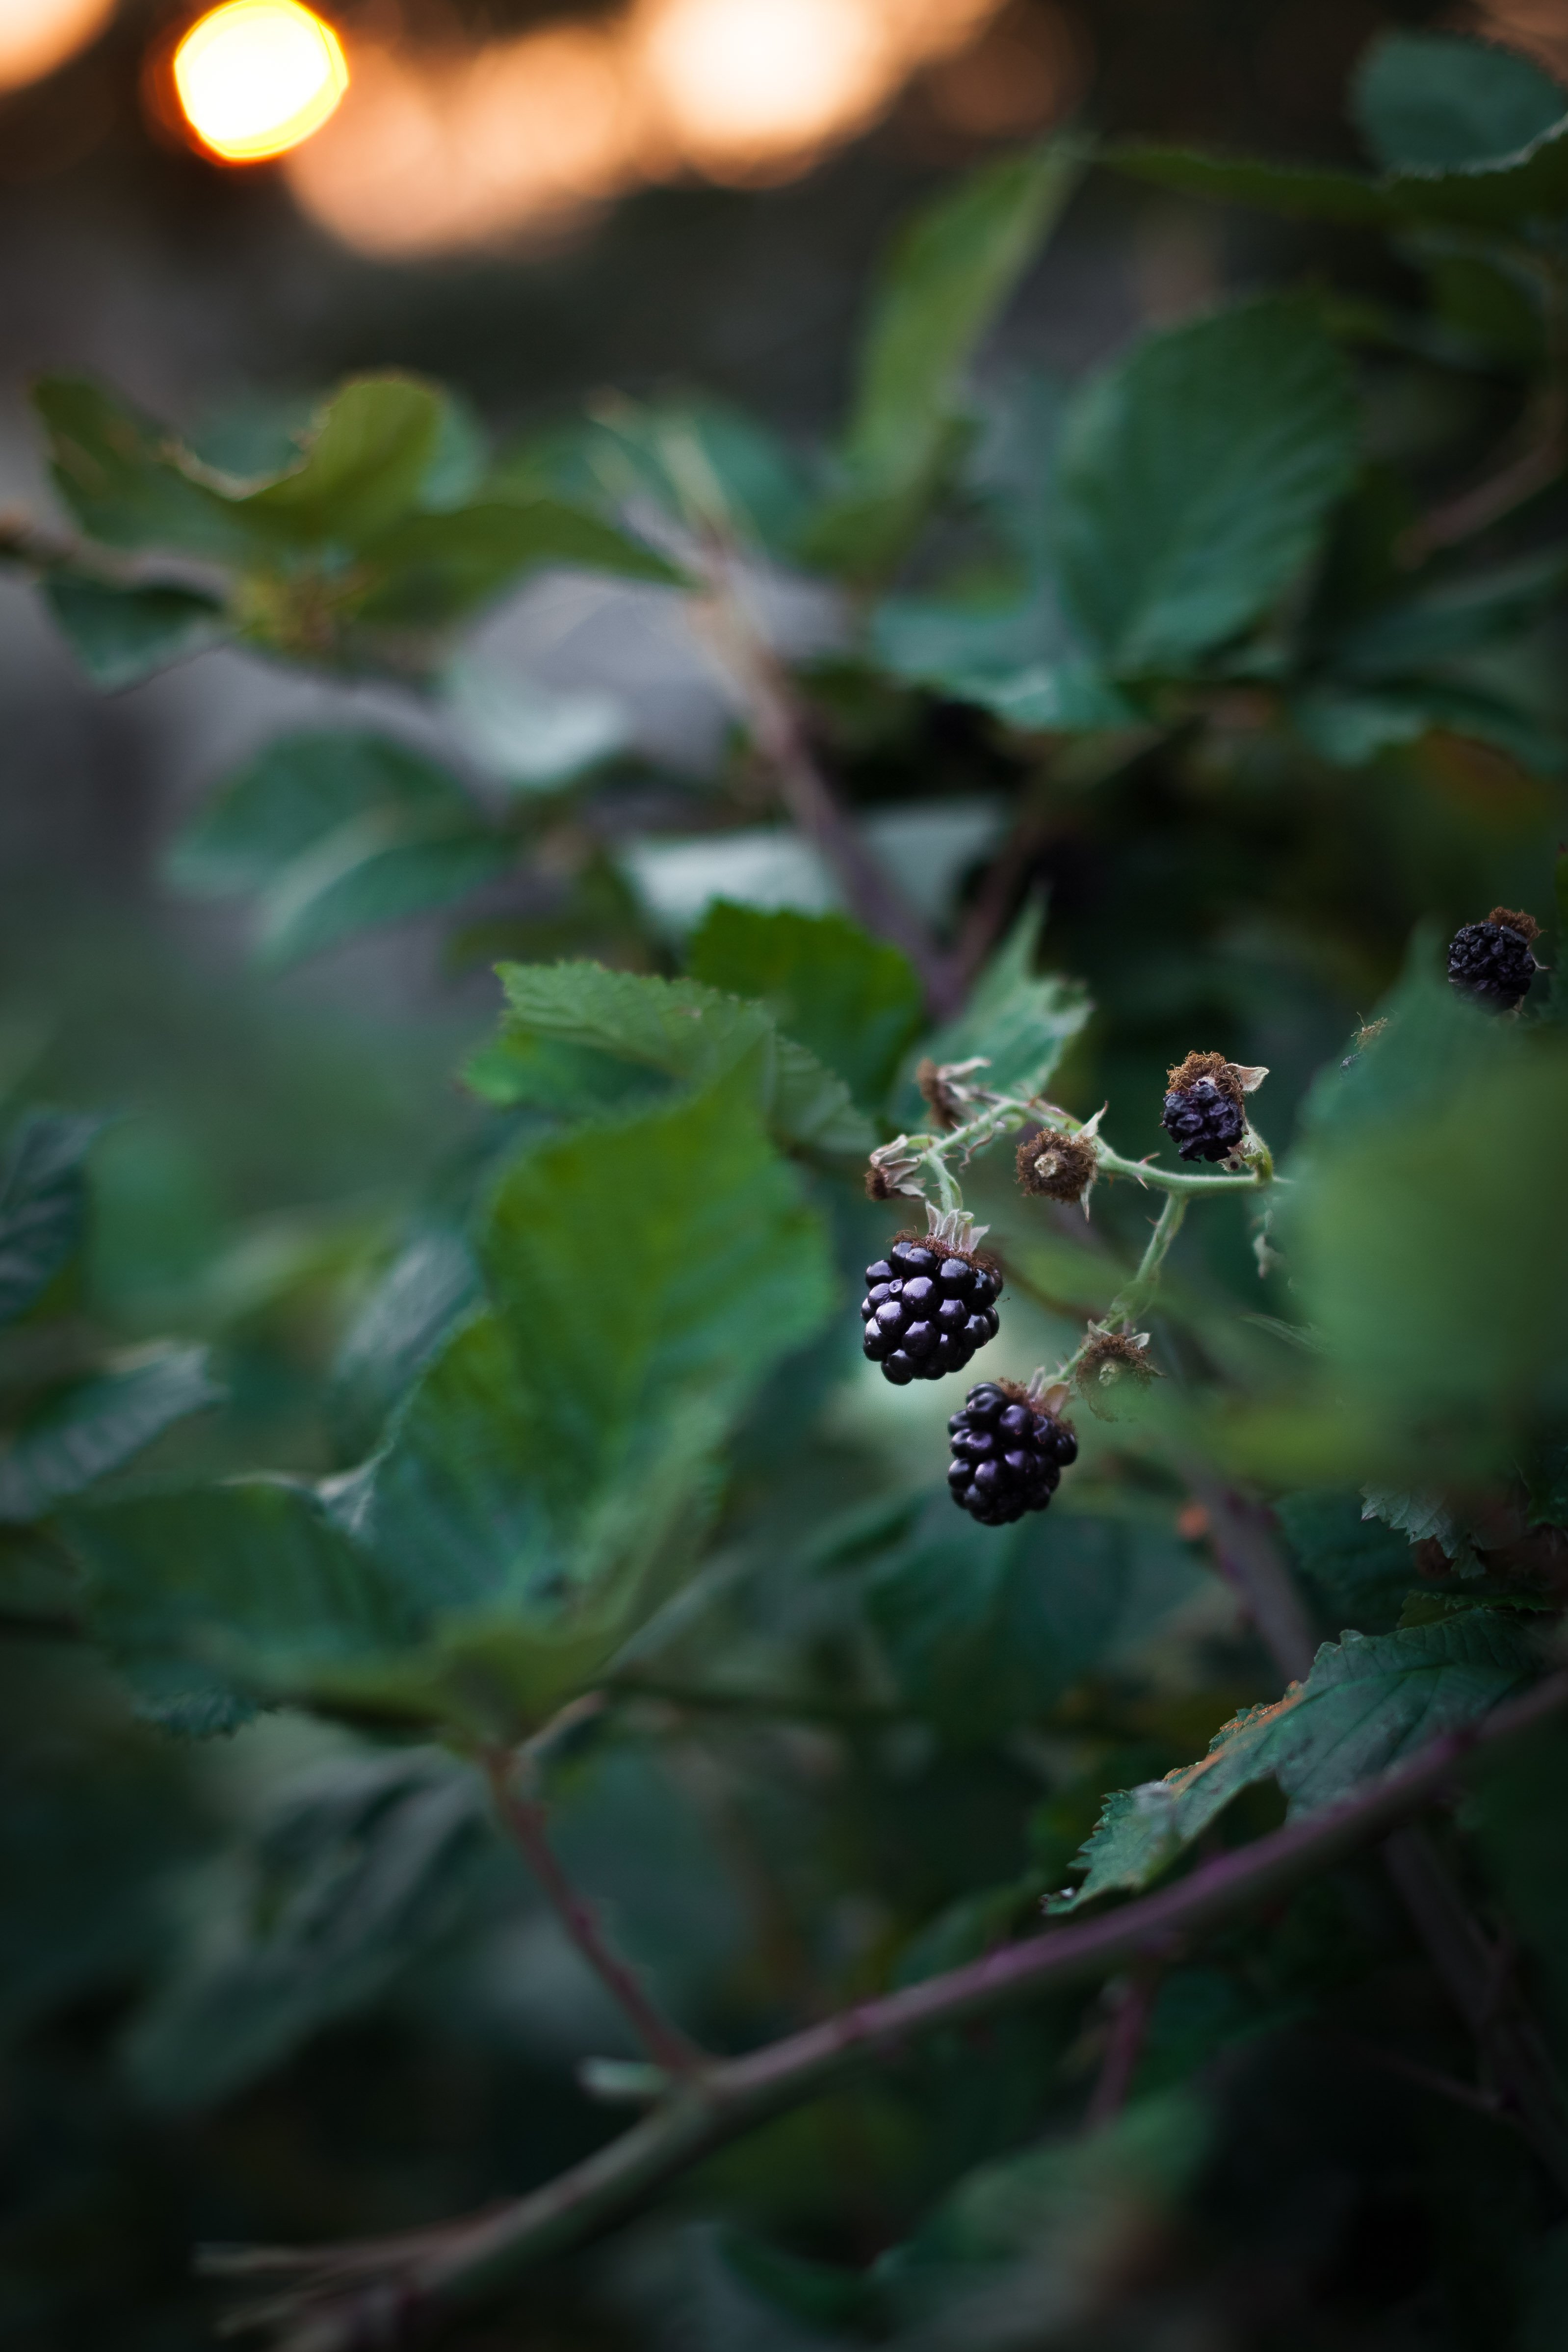 wild blackberries on the vine in evening light.